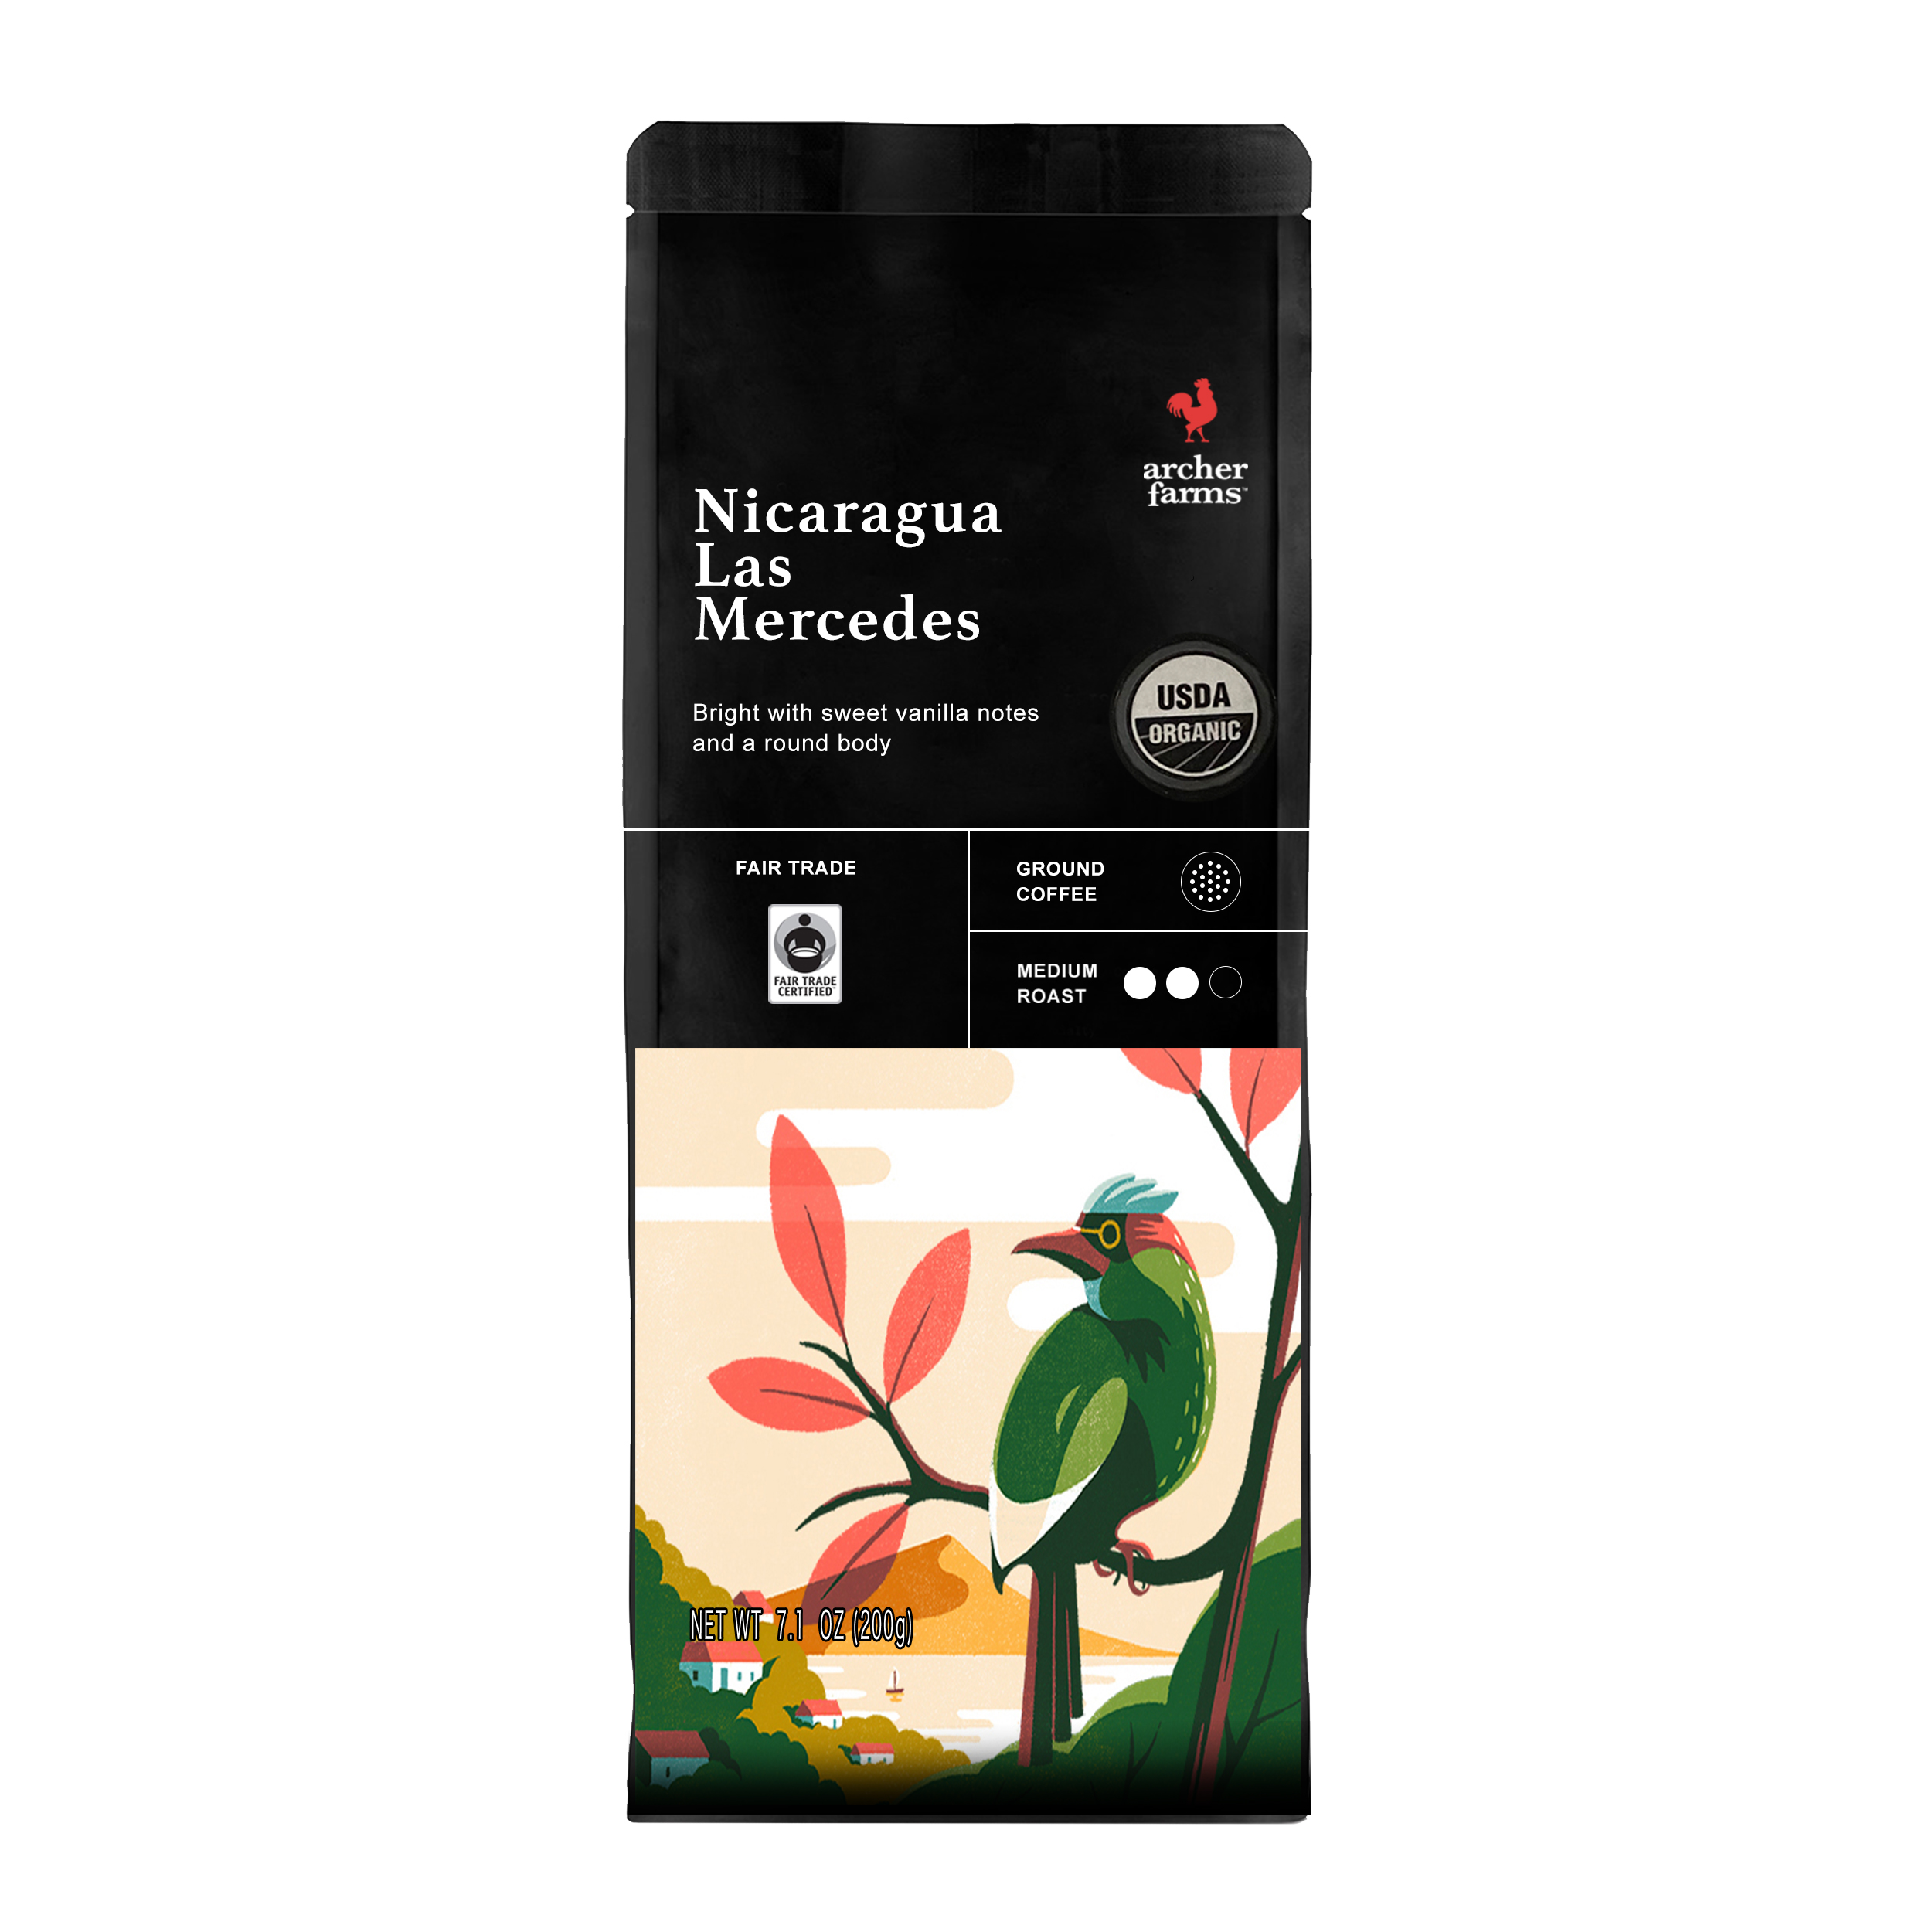 قهوه Nicaragua Las Mercedes آرچر فارمز - ۳۰۰ گرم